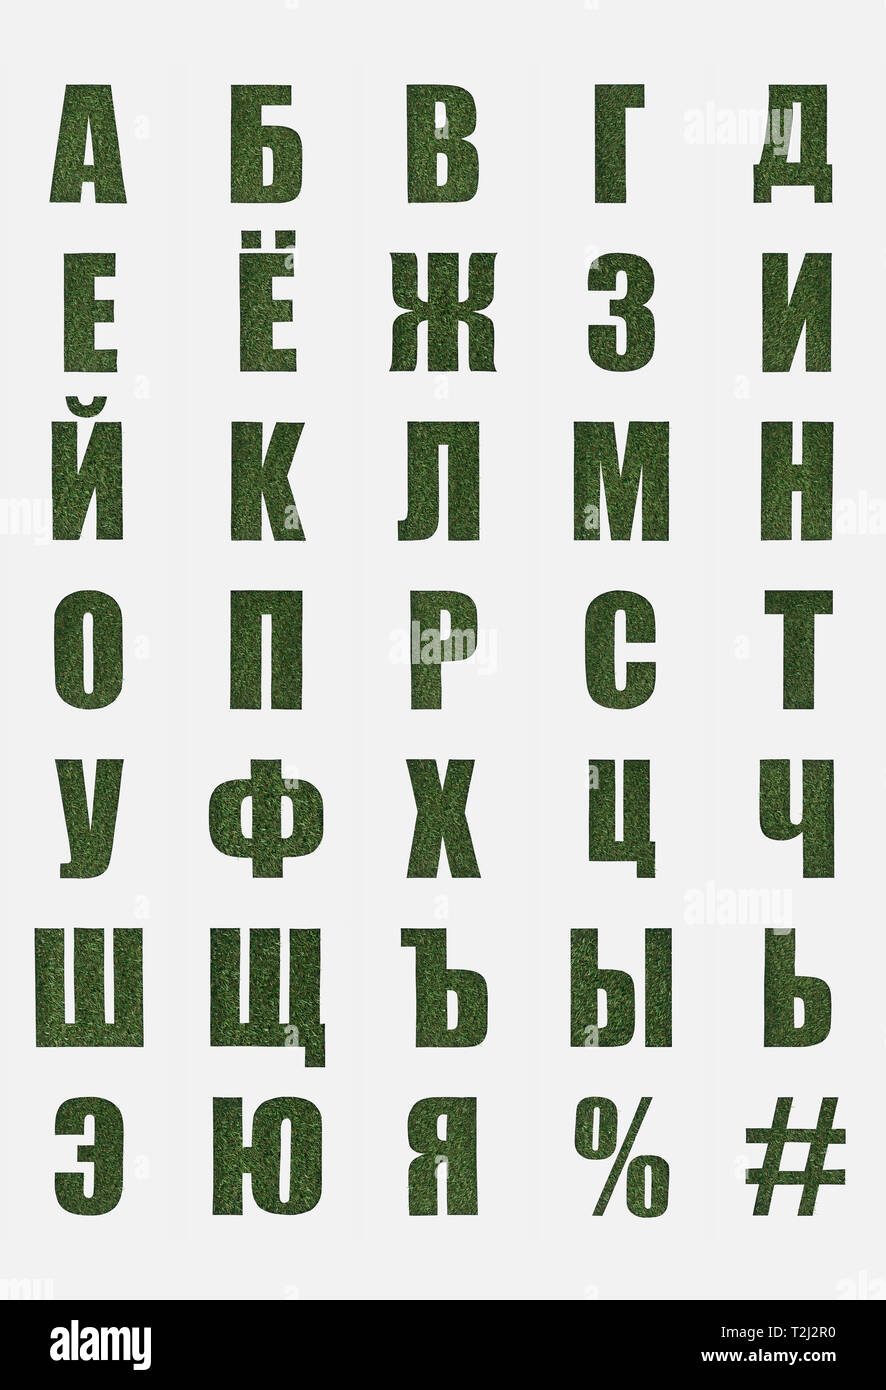 My Russian Alphabet Lore Set 